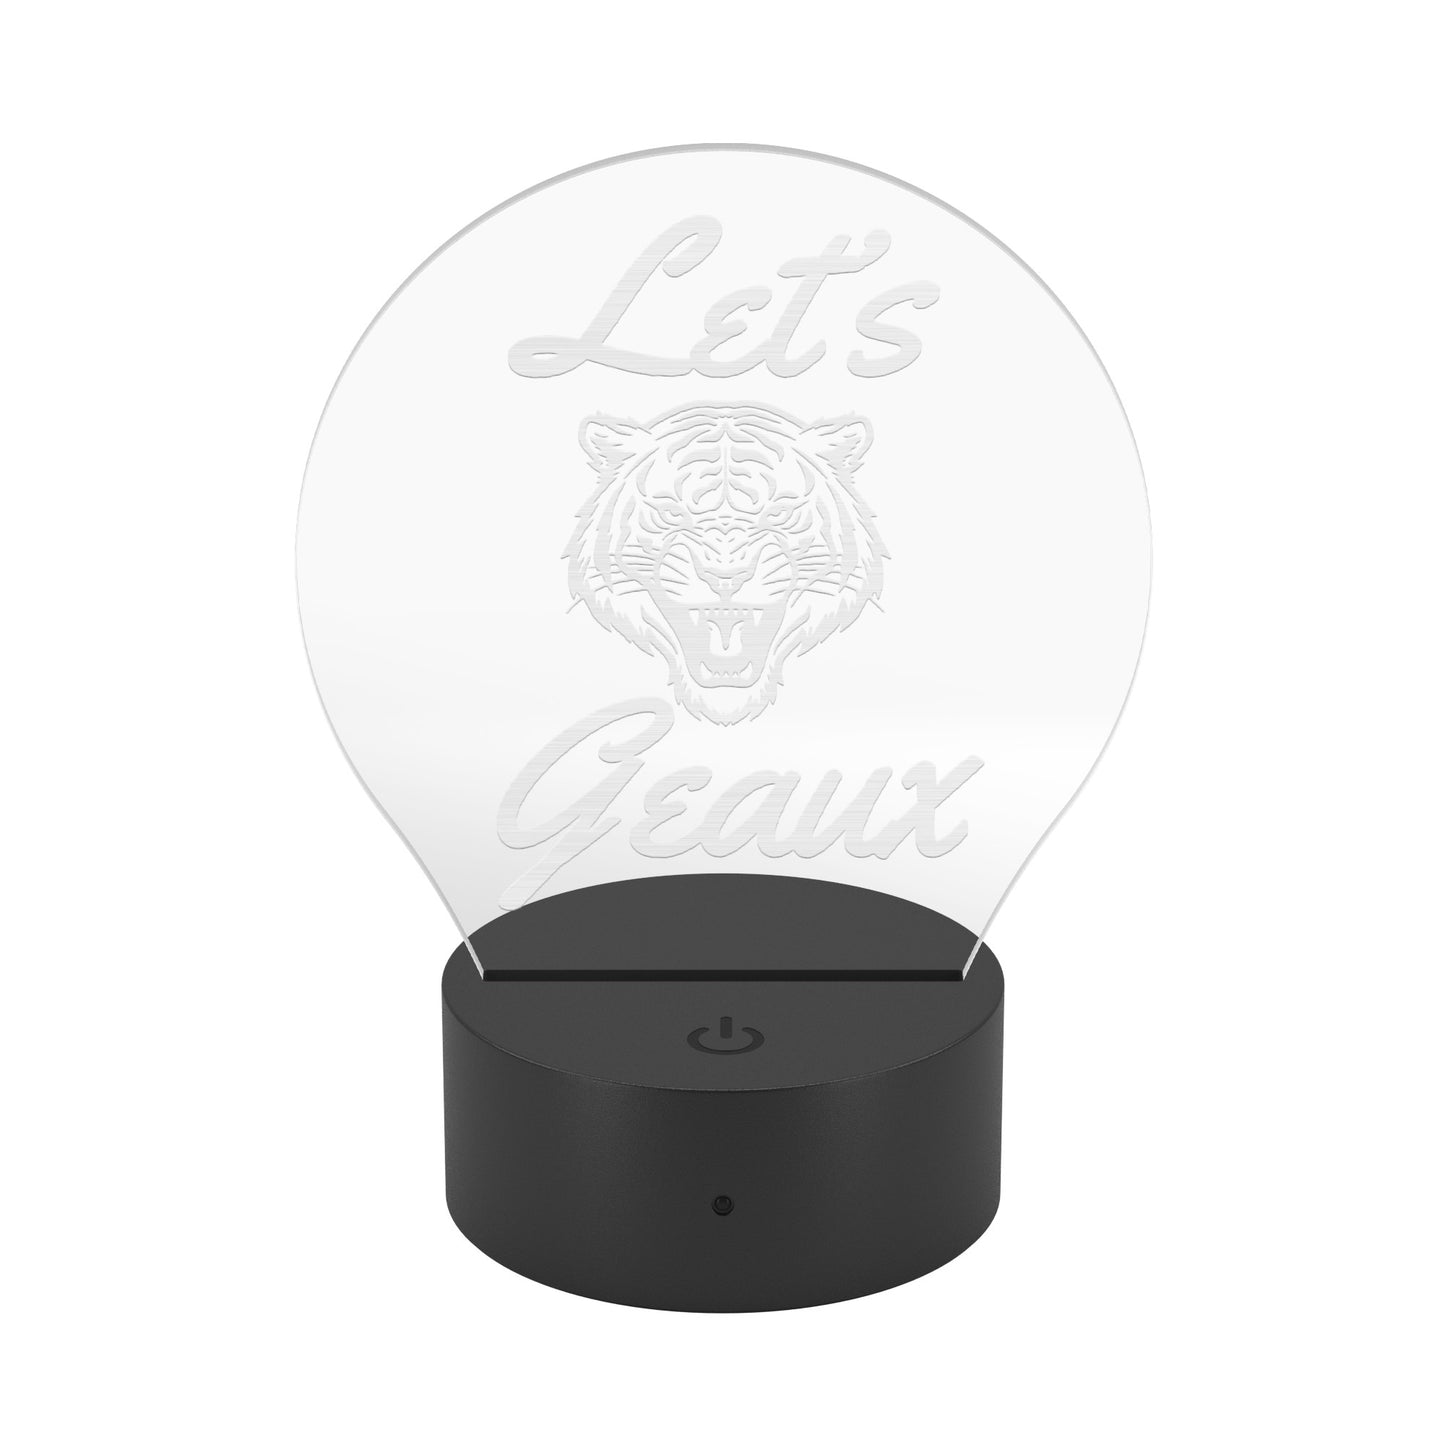 Let's Go Tigers University Acrylic LED Table Light